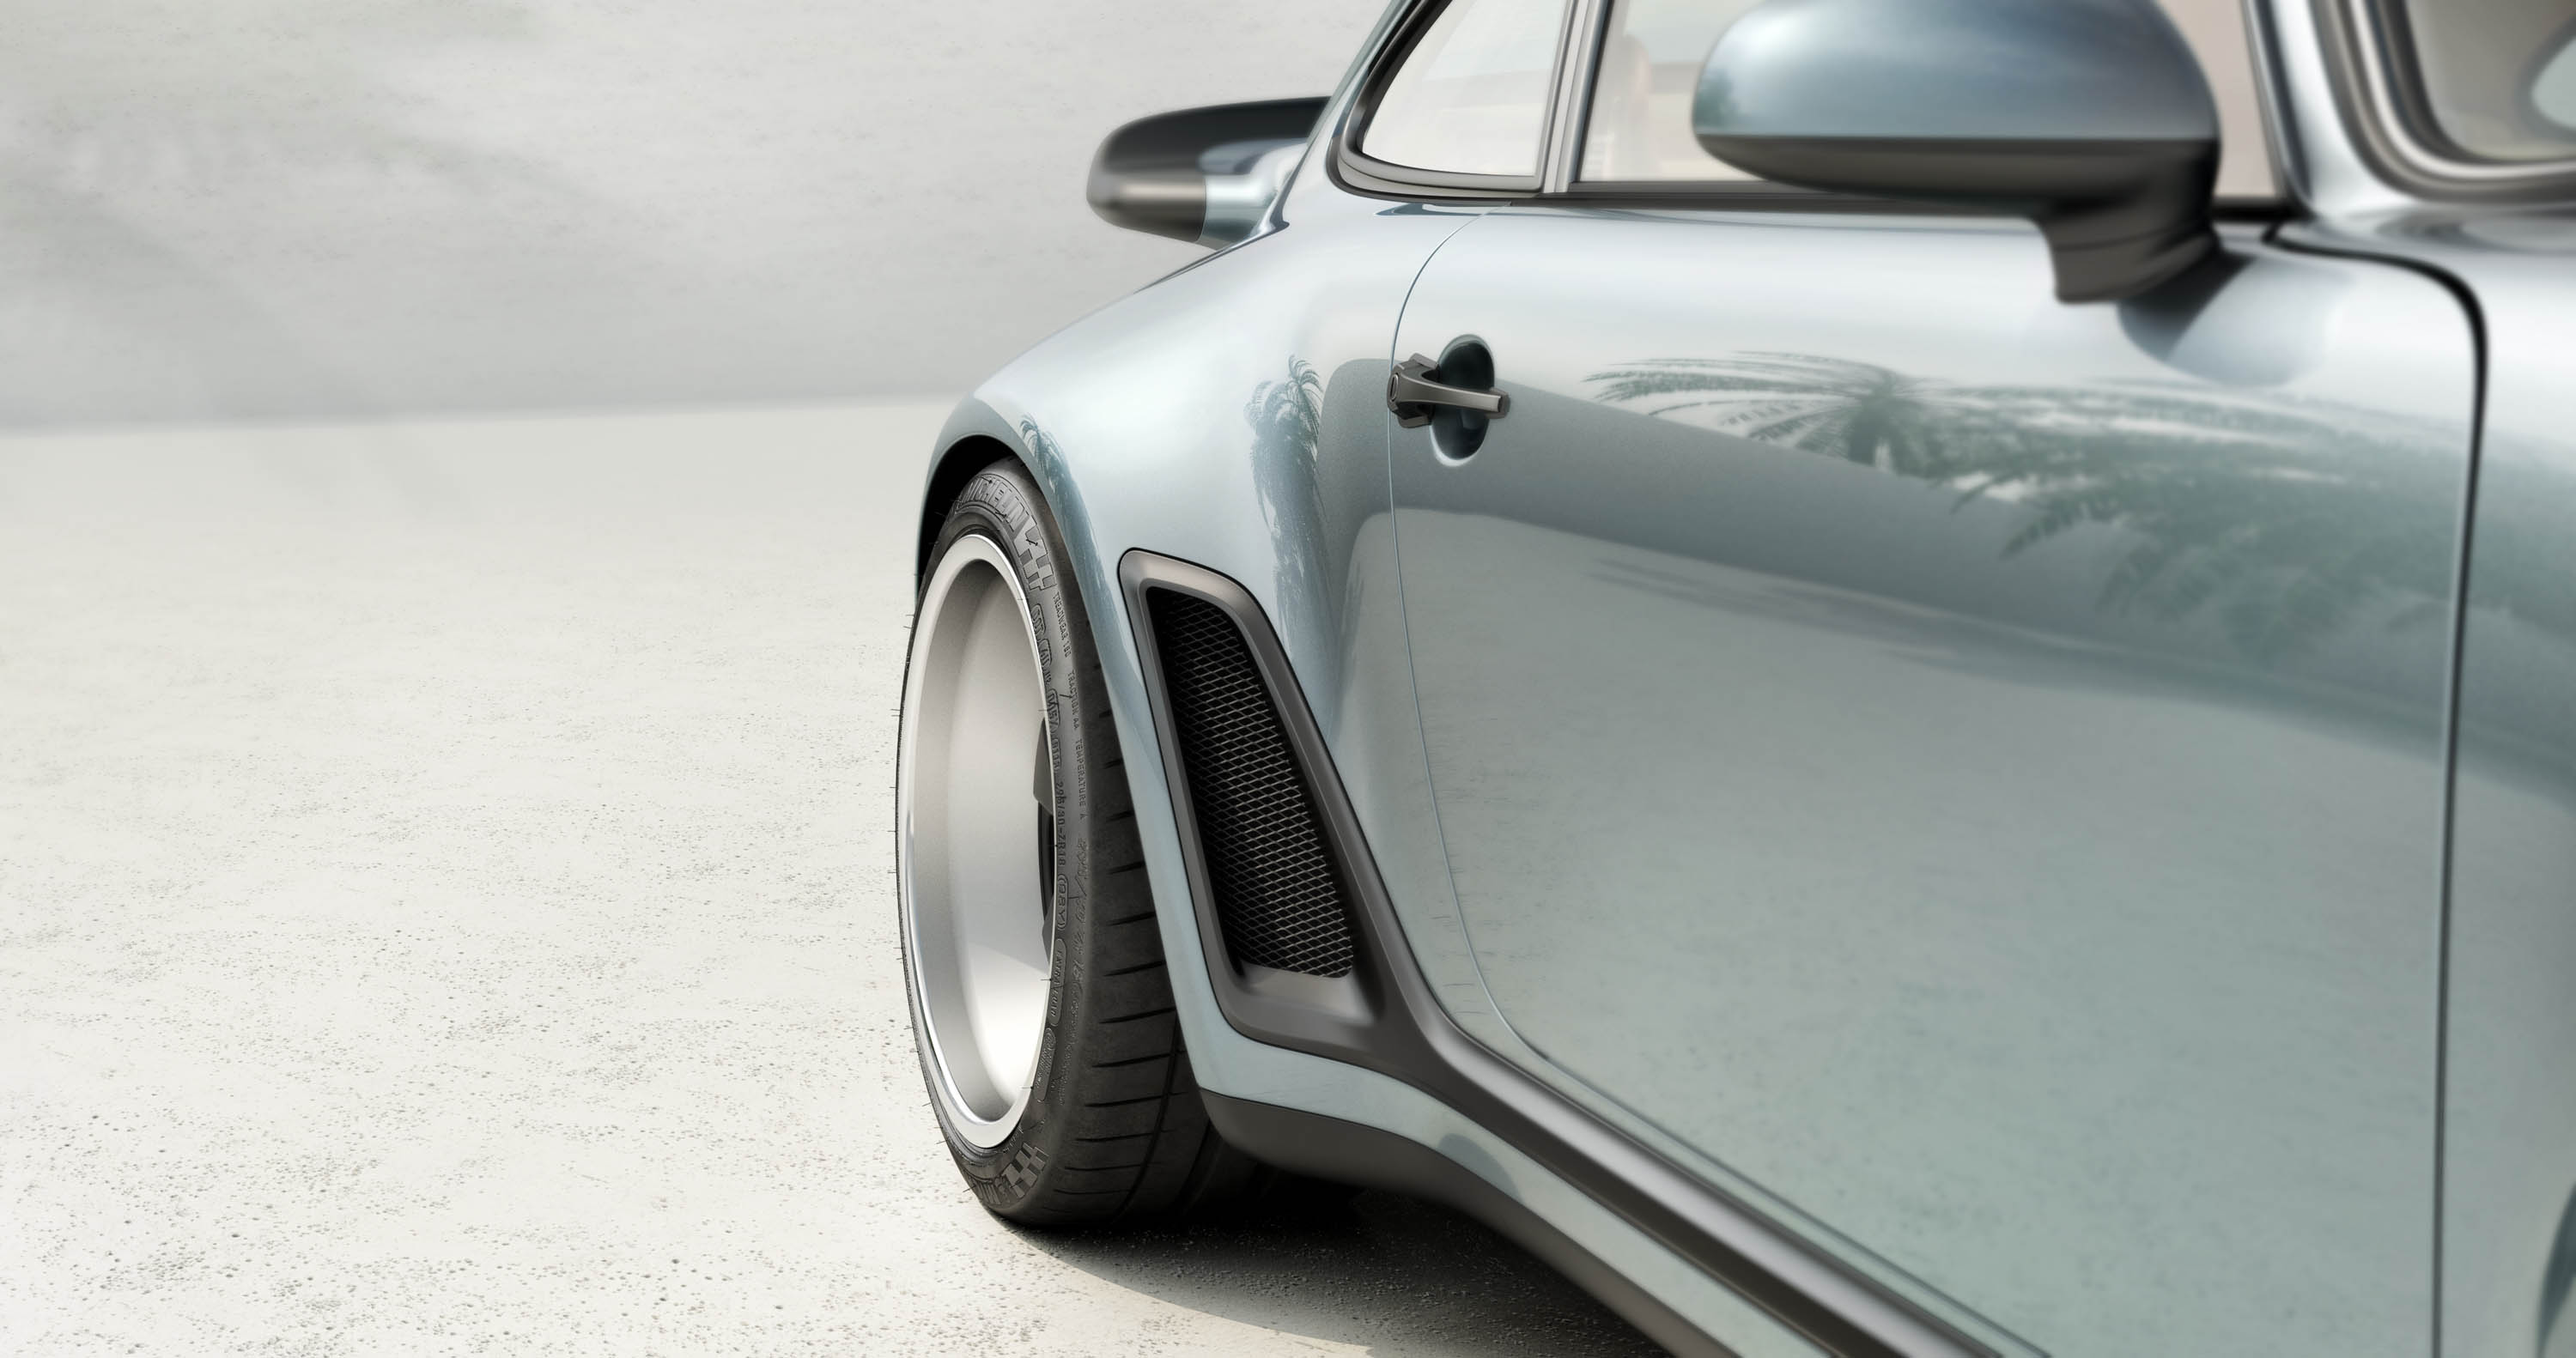 Porsche 911 Singer - Turbo Study